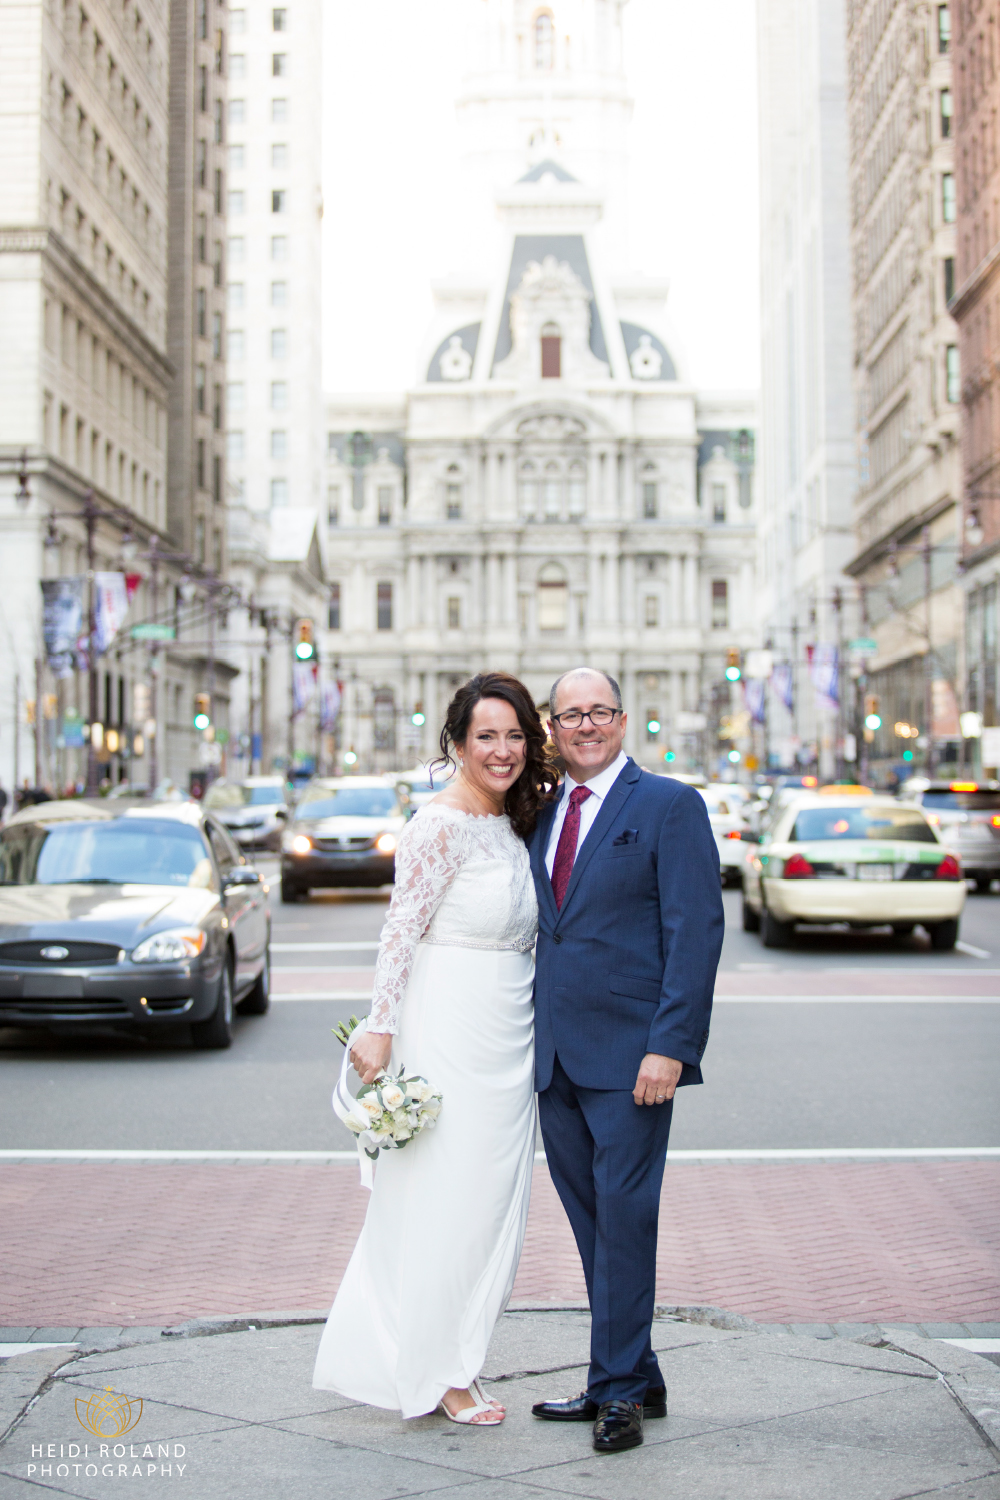 Broad street photo of bride and groom